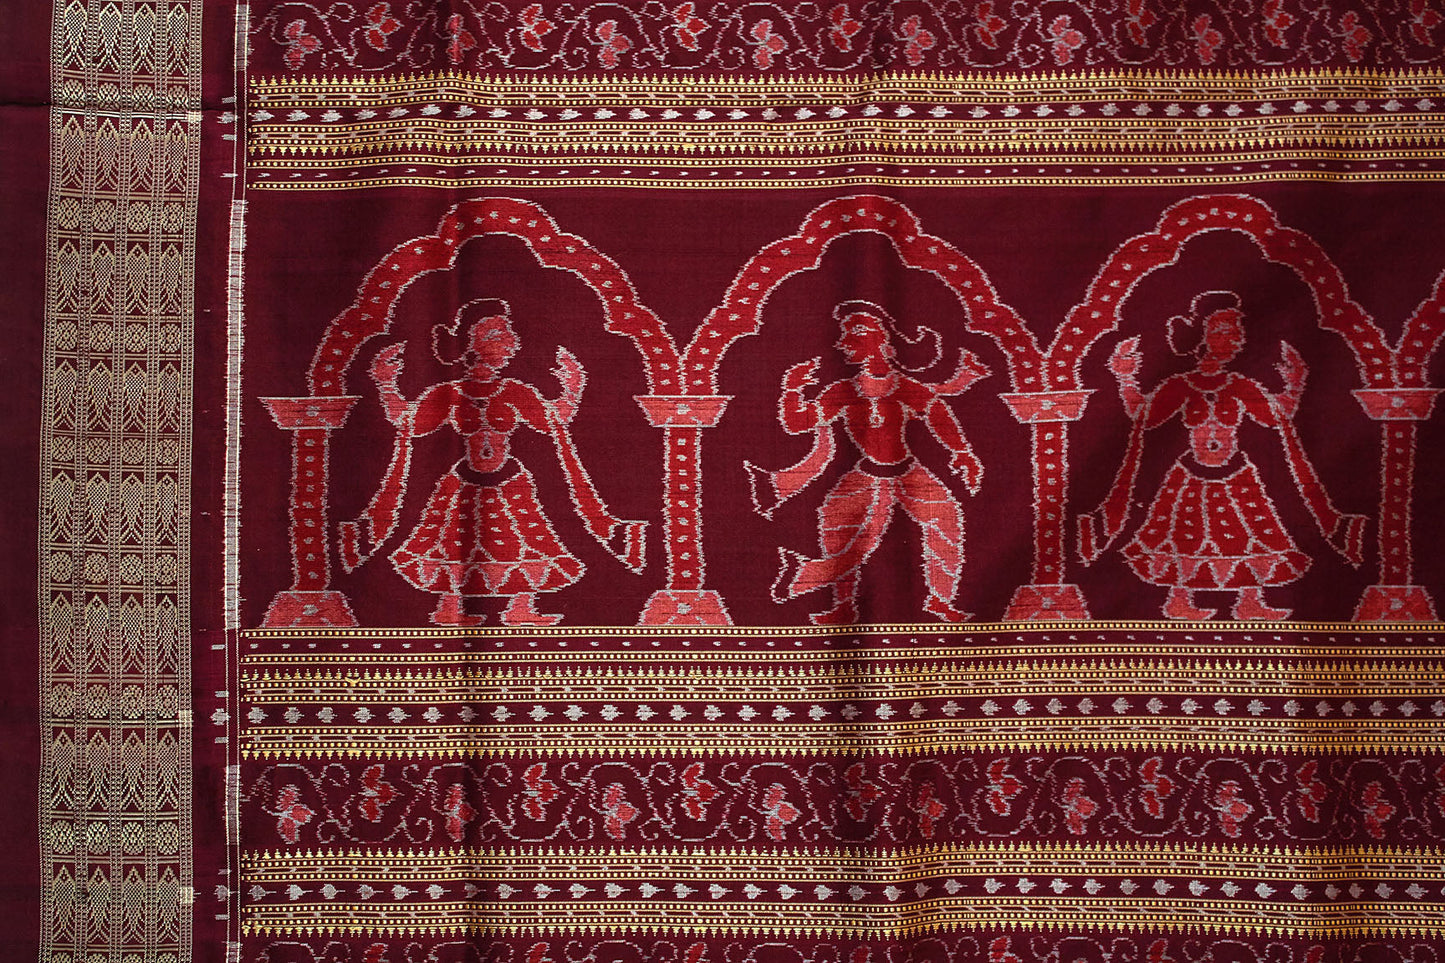 Master Weave Song of Eternal Love Raas Sambalpuri Sari